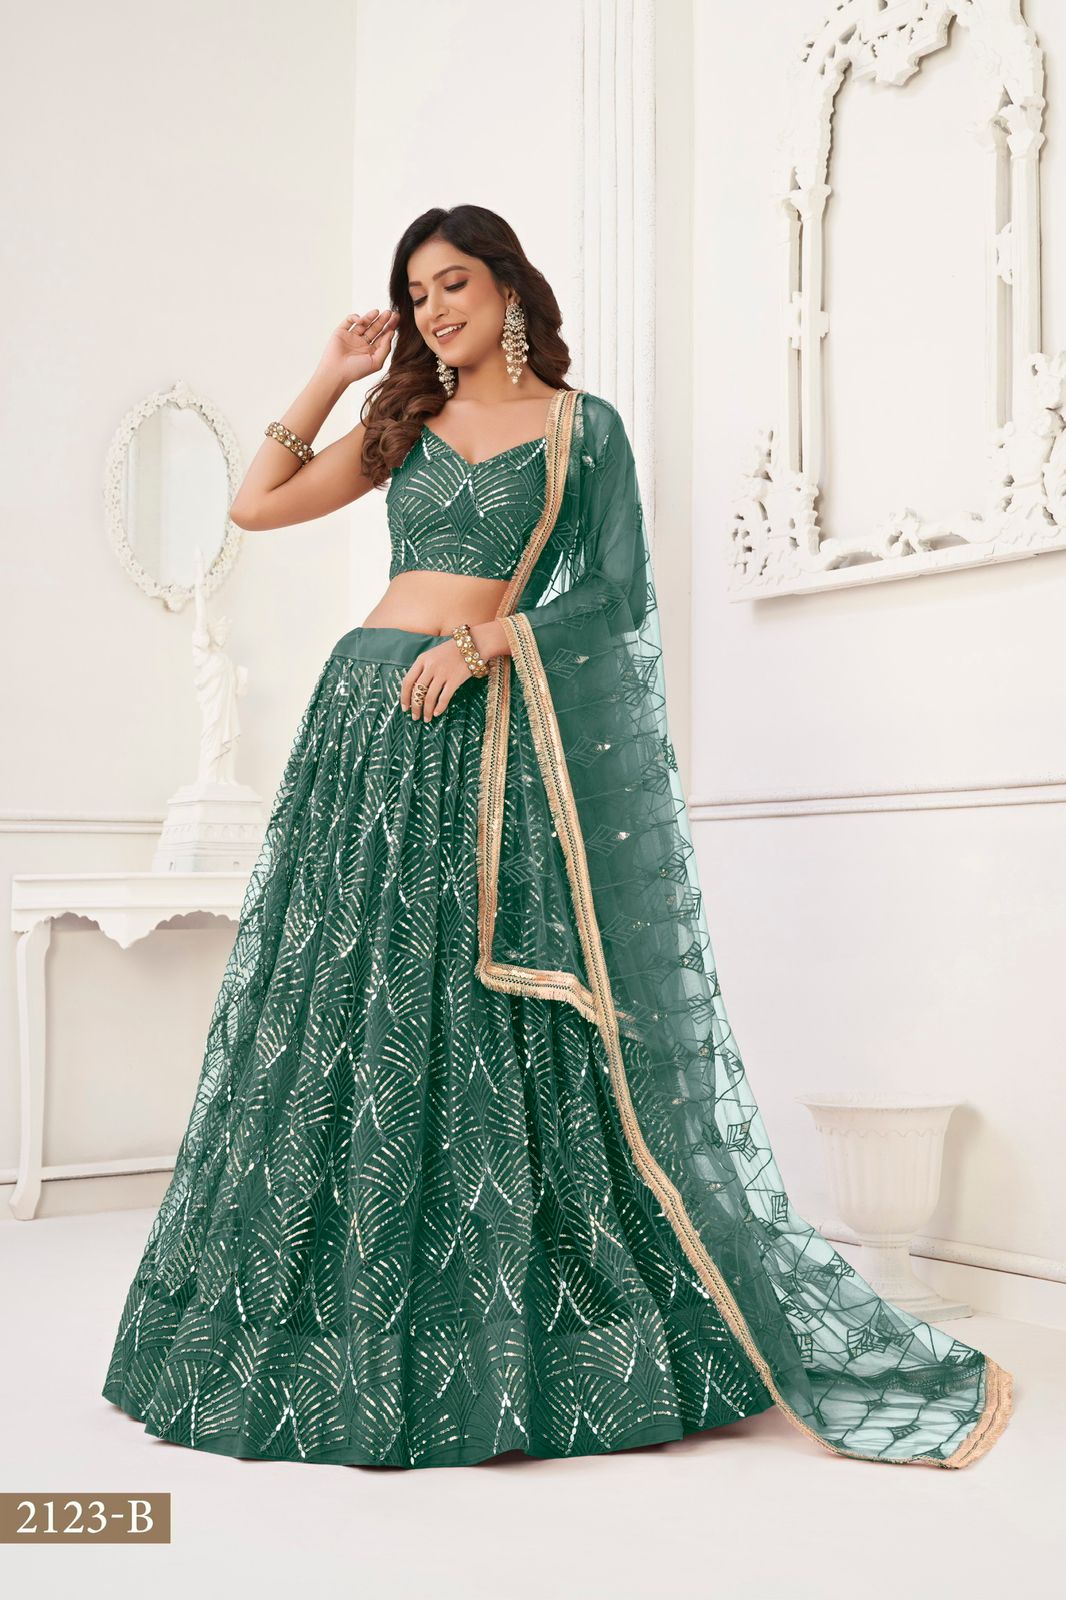 Shop For Online Indian Wedding Lehenga in USA - KARMAPLACE.COM